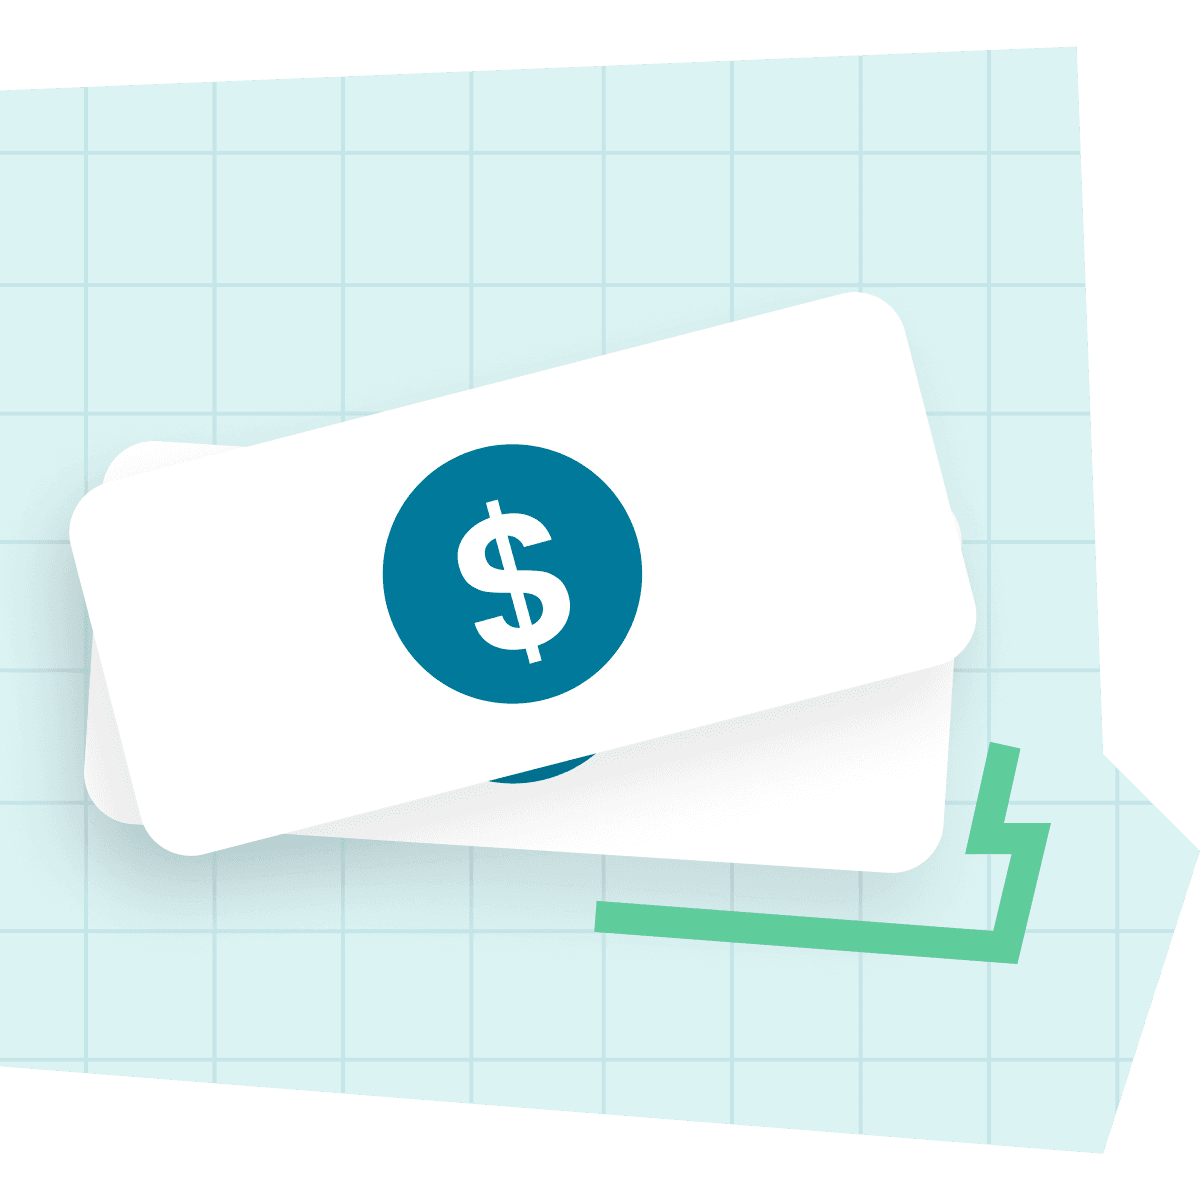 An illustration of a stack of dollar bills